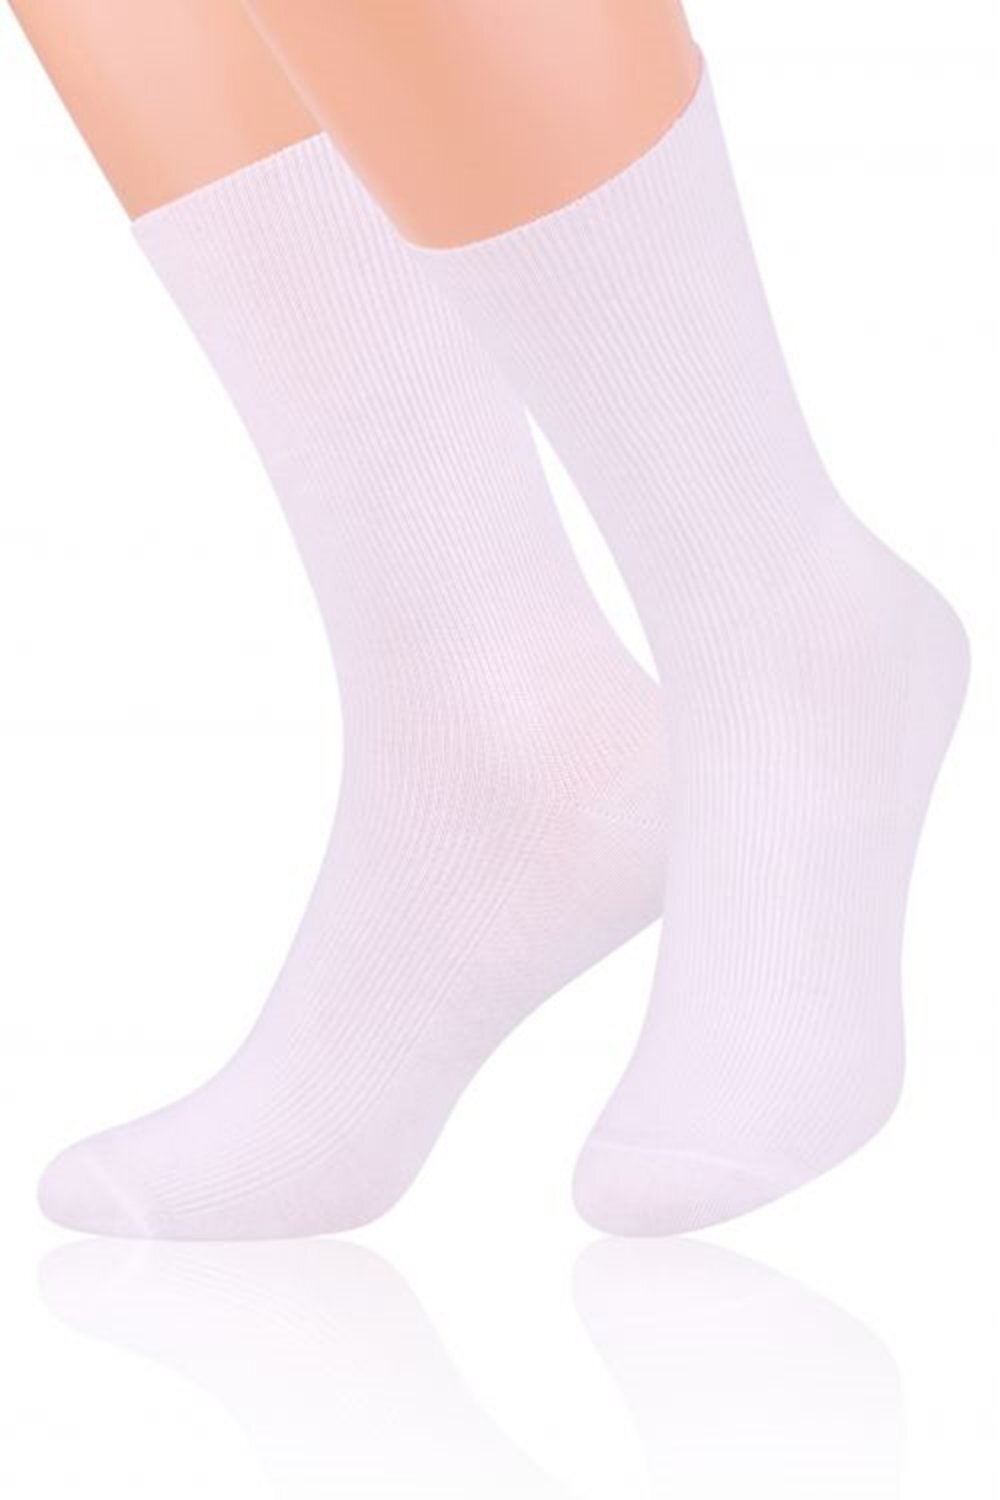 Steven Pánské ponožky 018 white